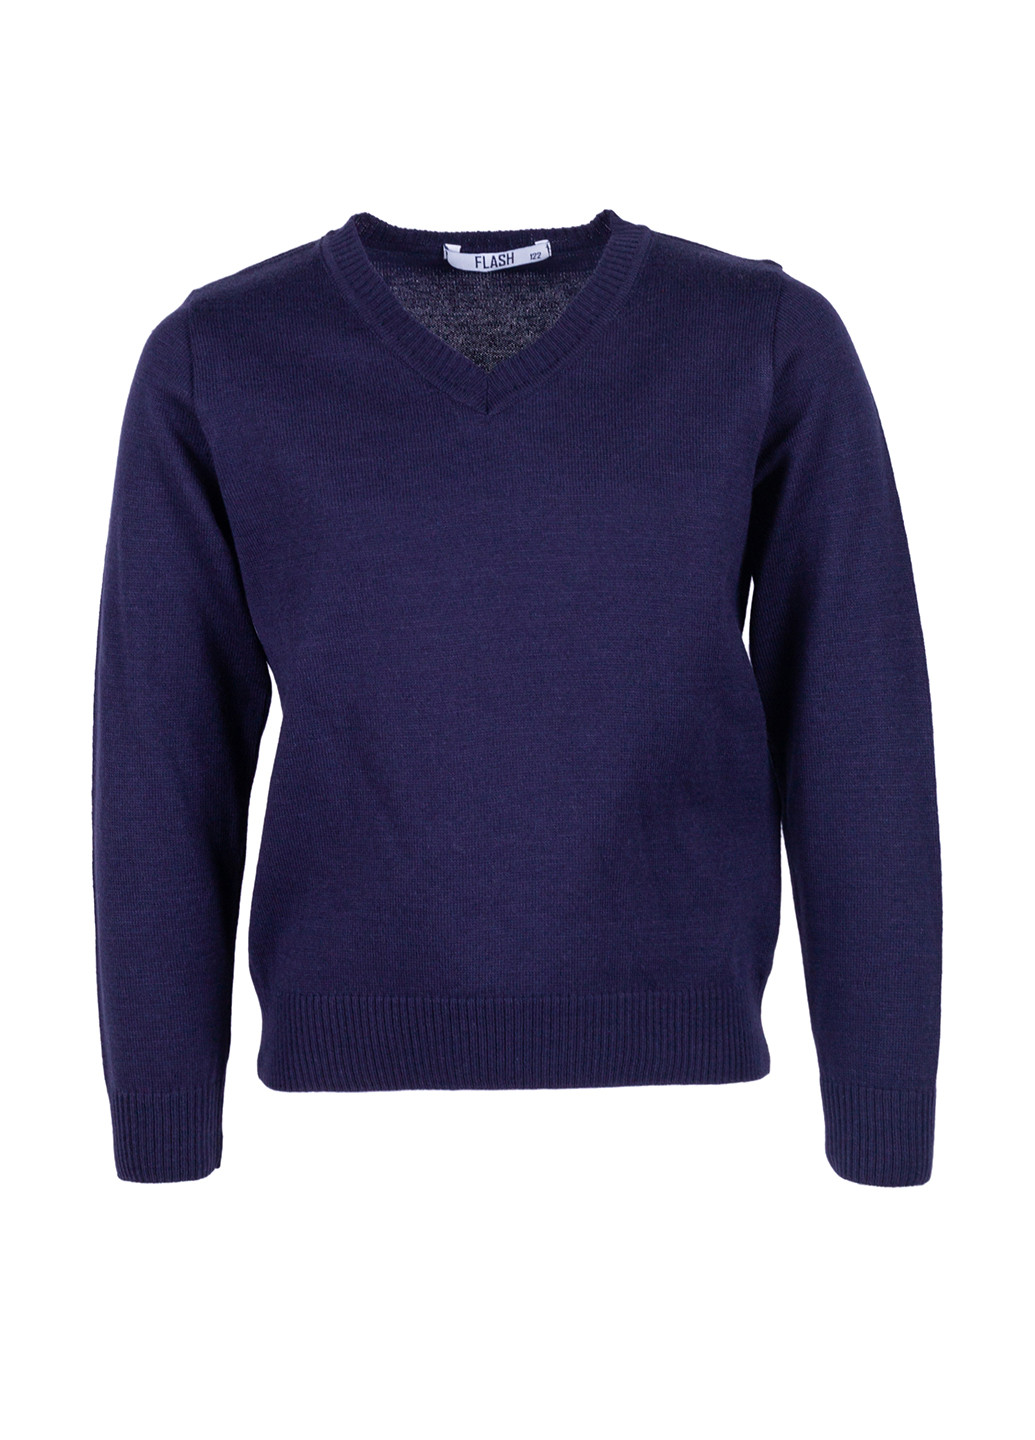 Синий демисезонный пуловер пуловер Flash